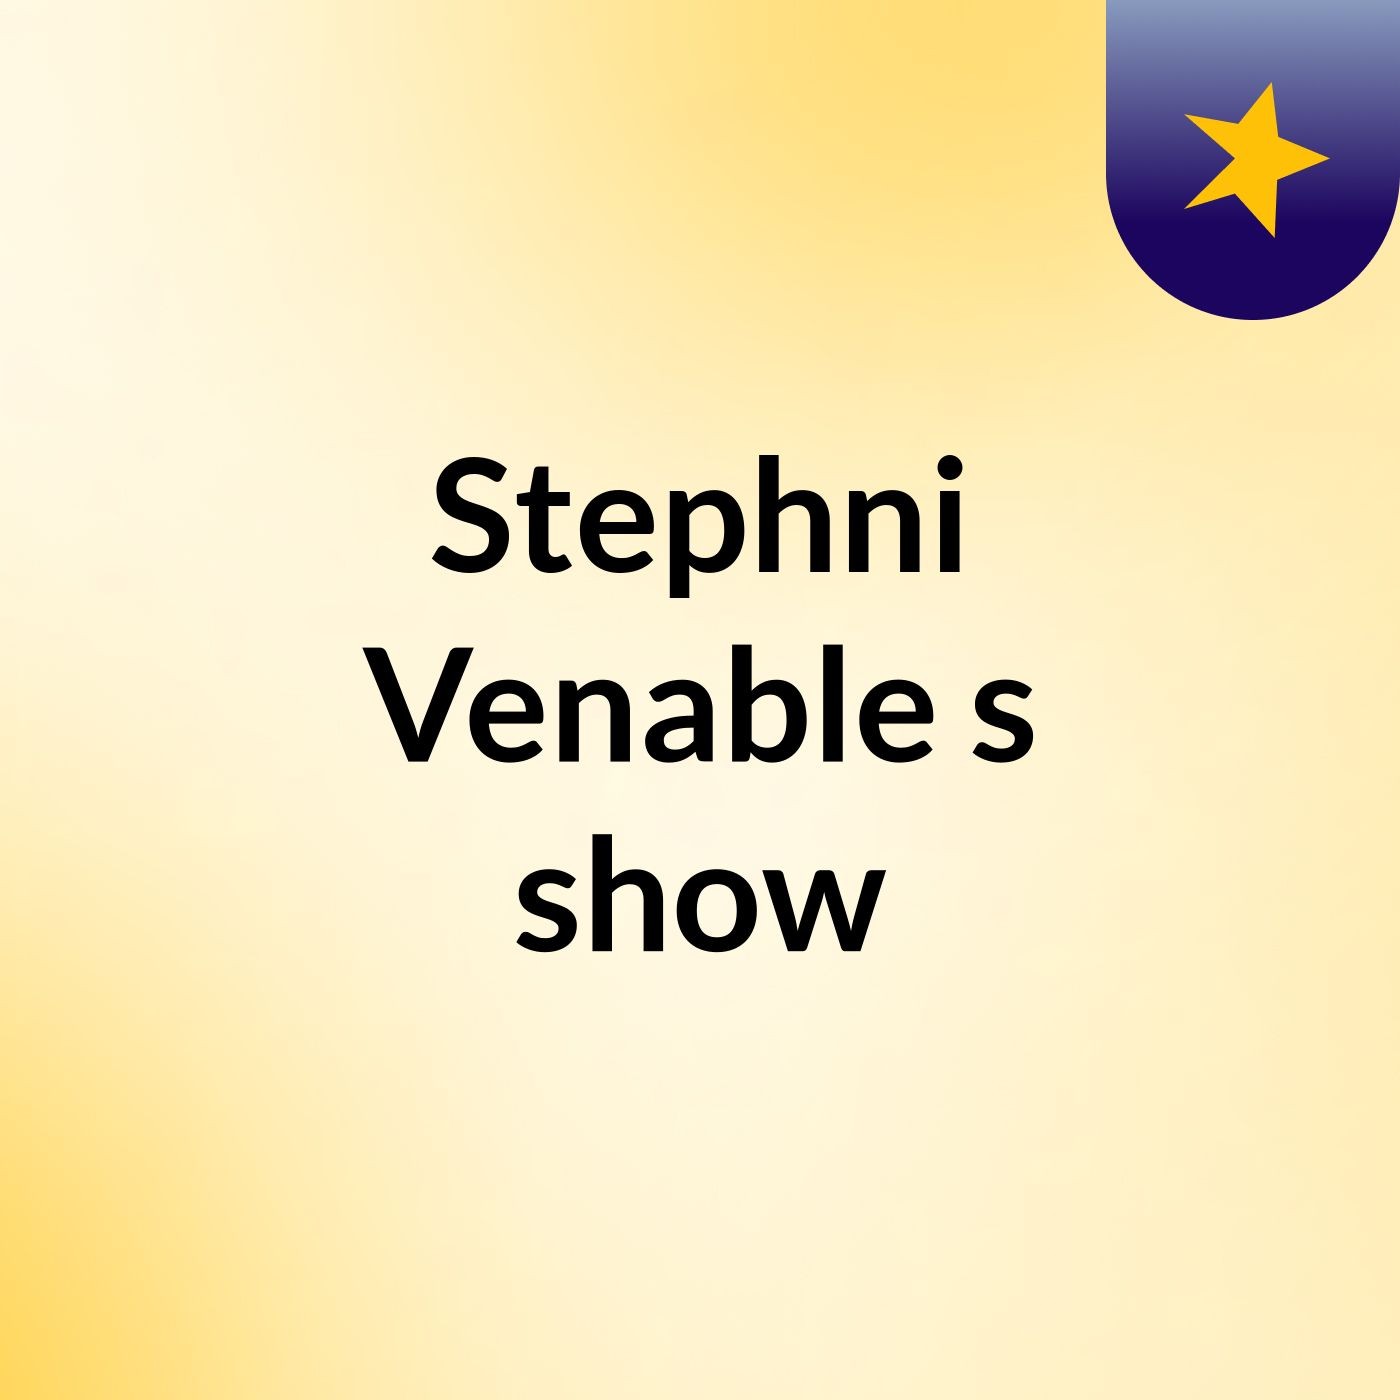 Episode 4 - Stephni Venable's show